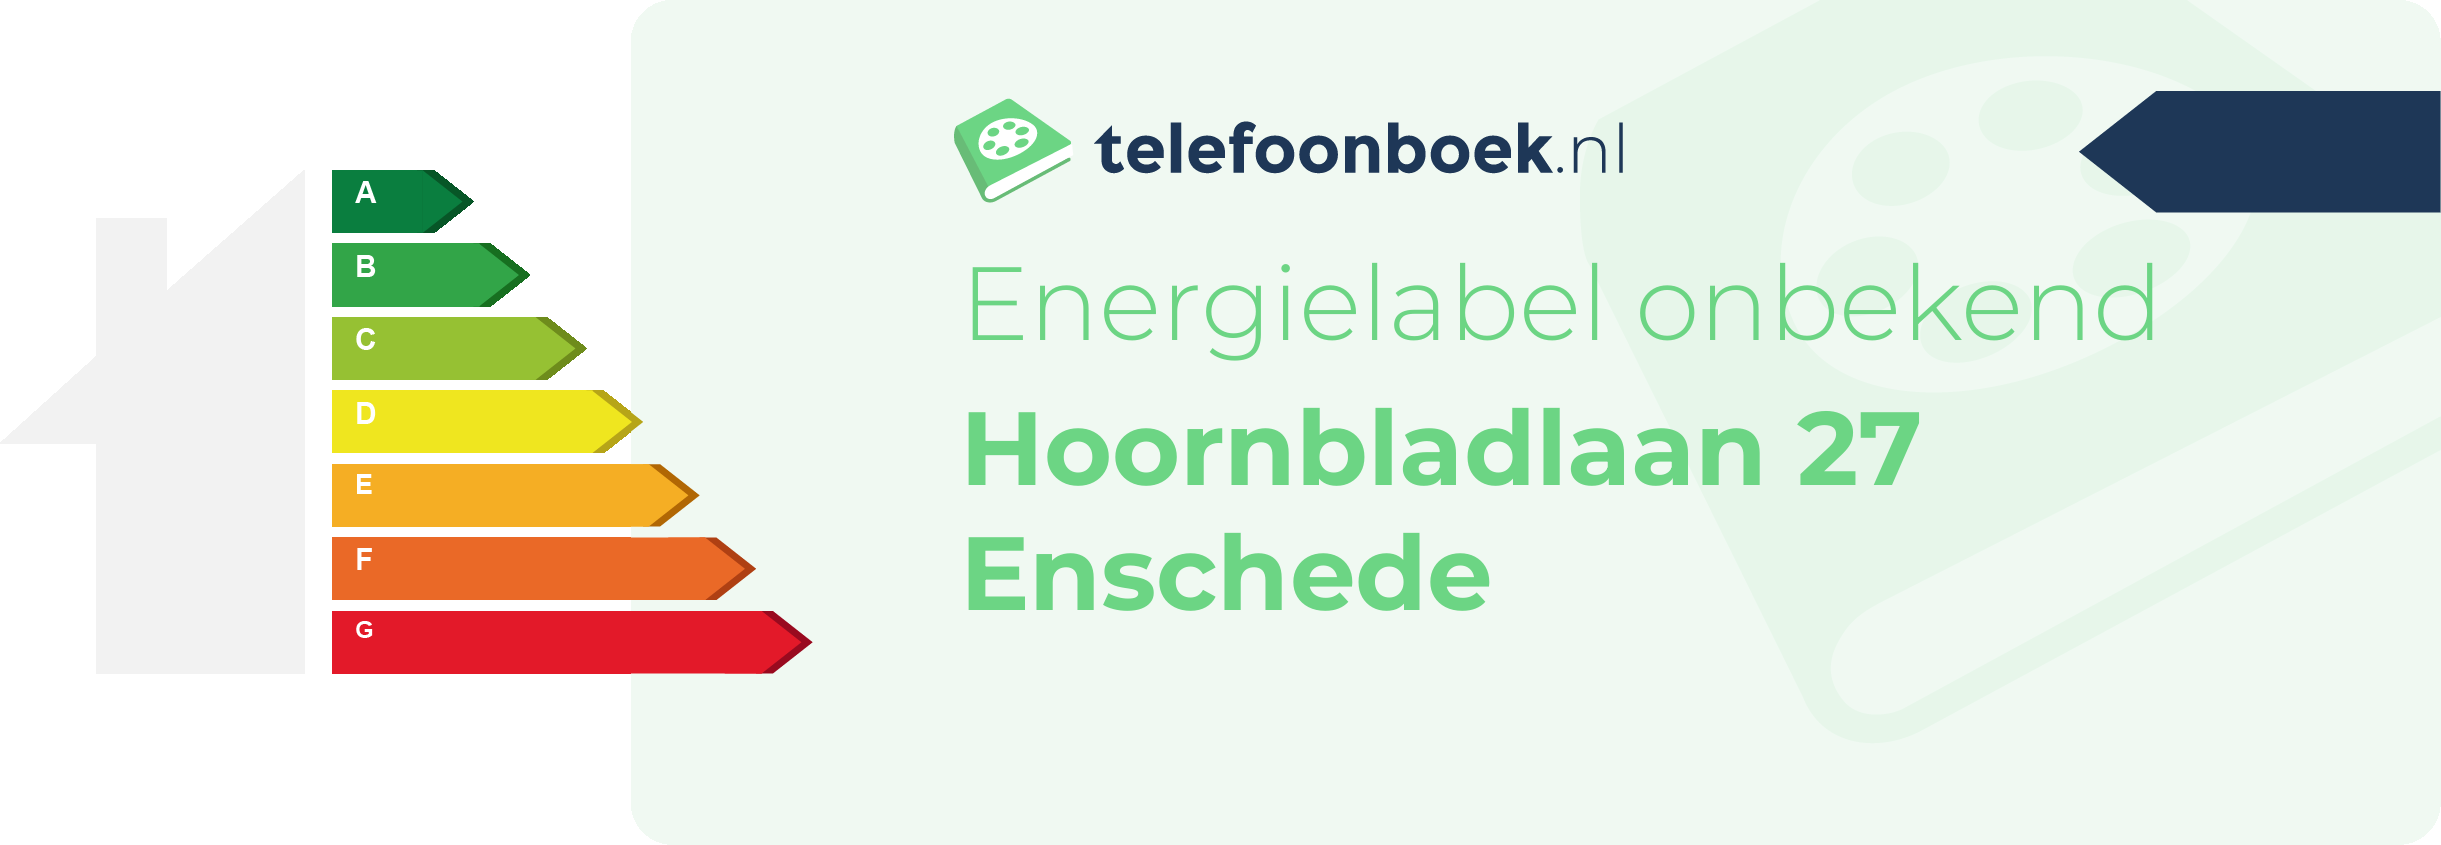 Energielabel Hoornbladlaan 27 Enschede